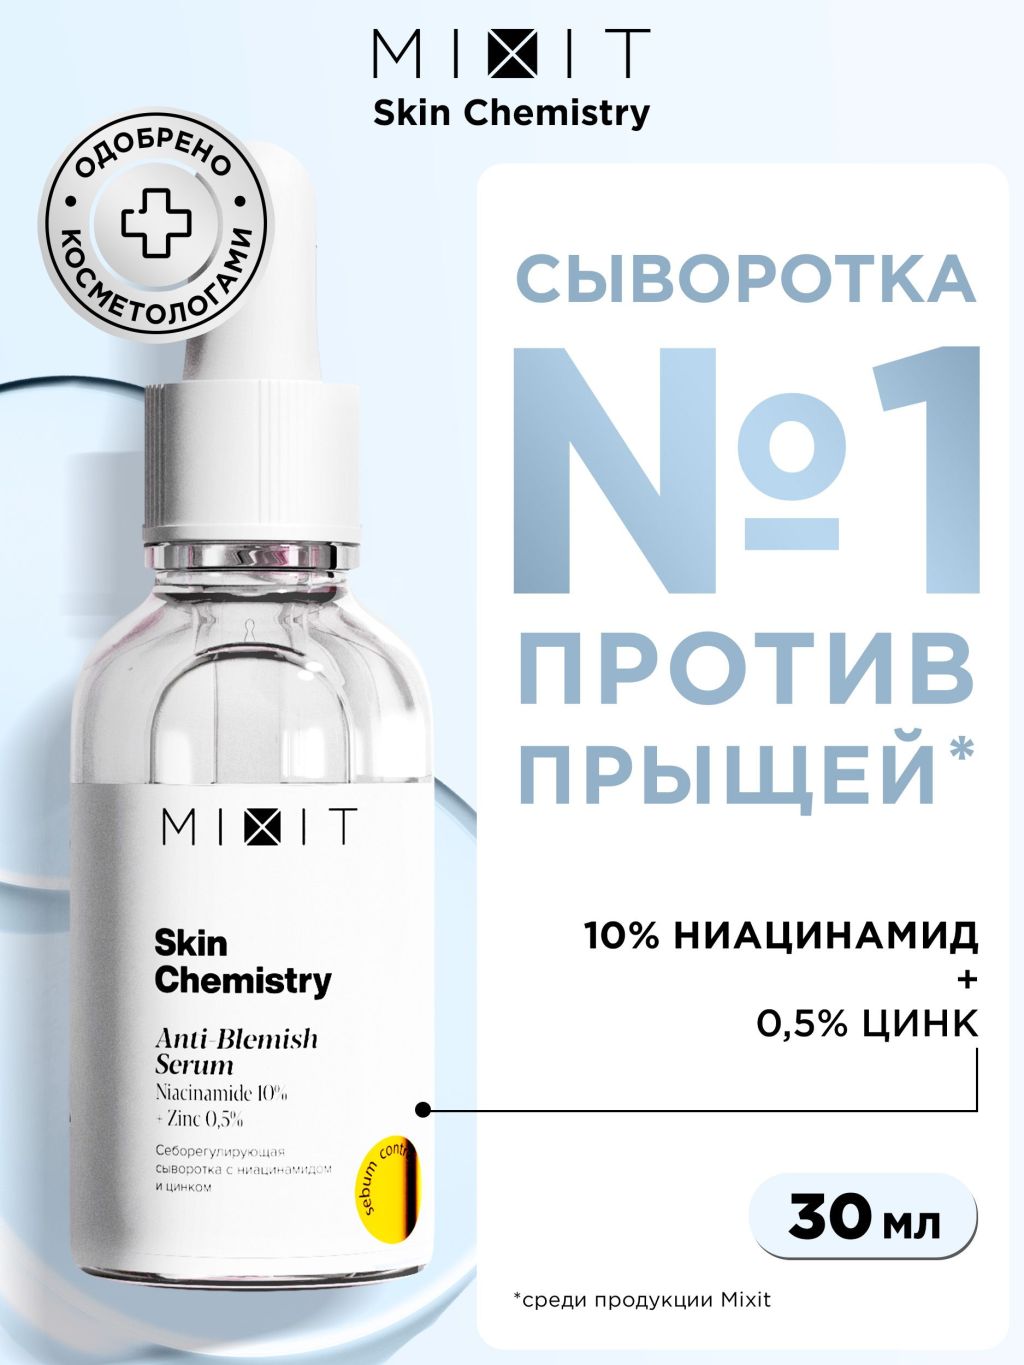 Сыворотка MIXIT Skin Chemistry Niacinamide 10% + Zinc 0,5% Serum, 30 мл